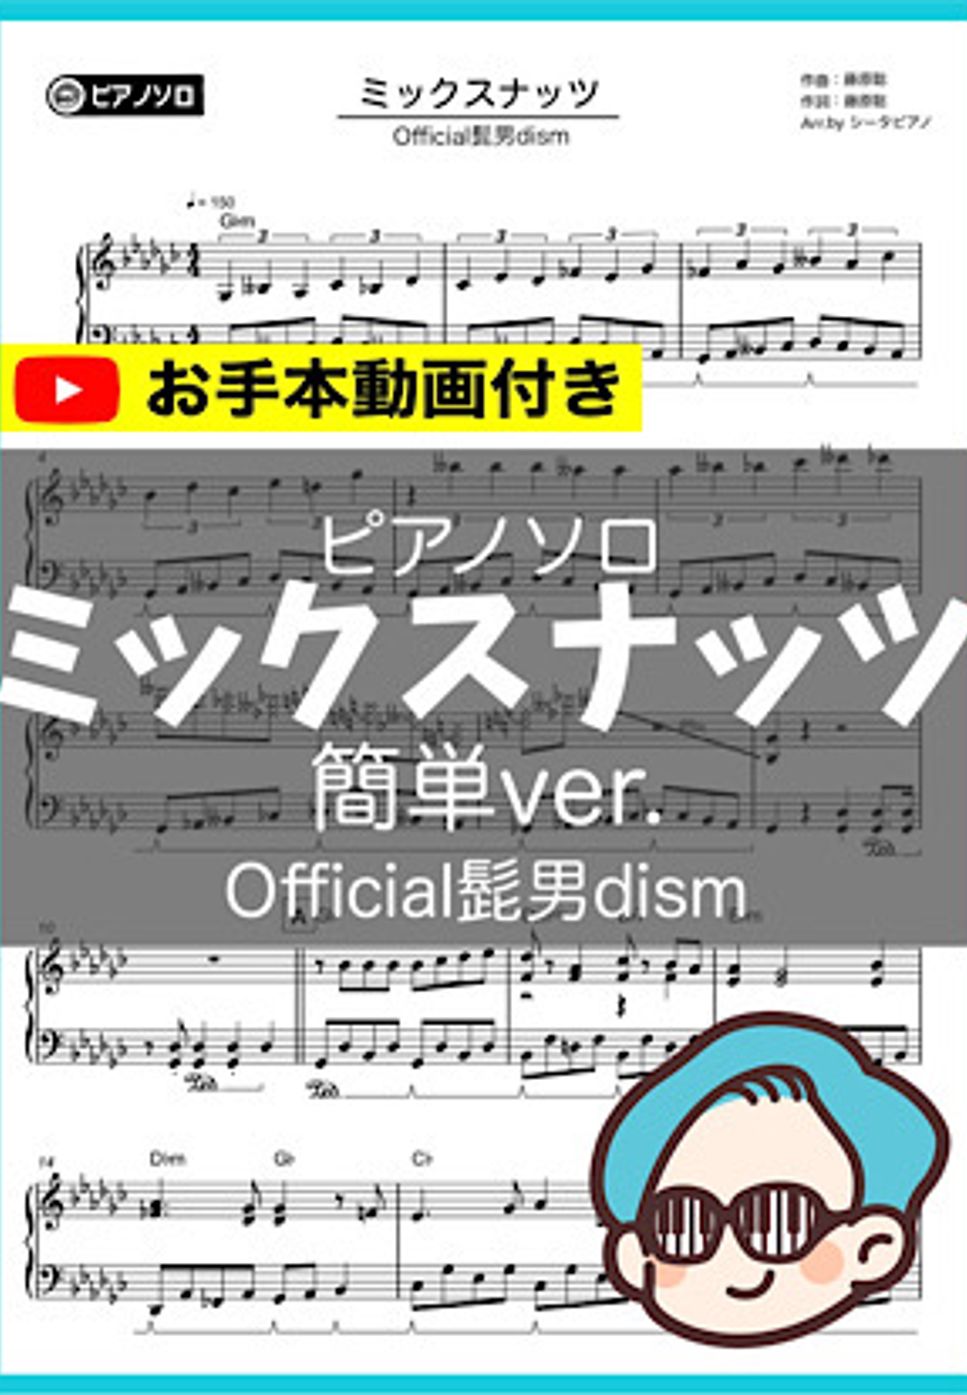 Official髭男dism - ミックスナッツ(簡単ver.) by シータピアノ